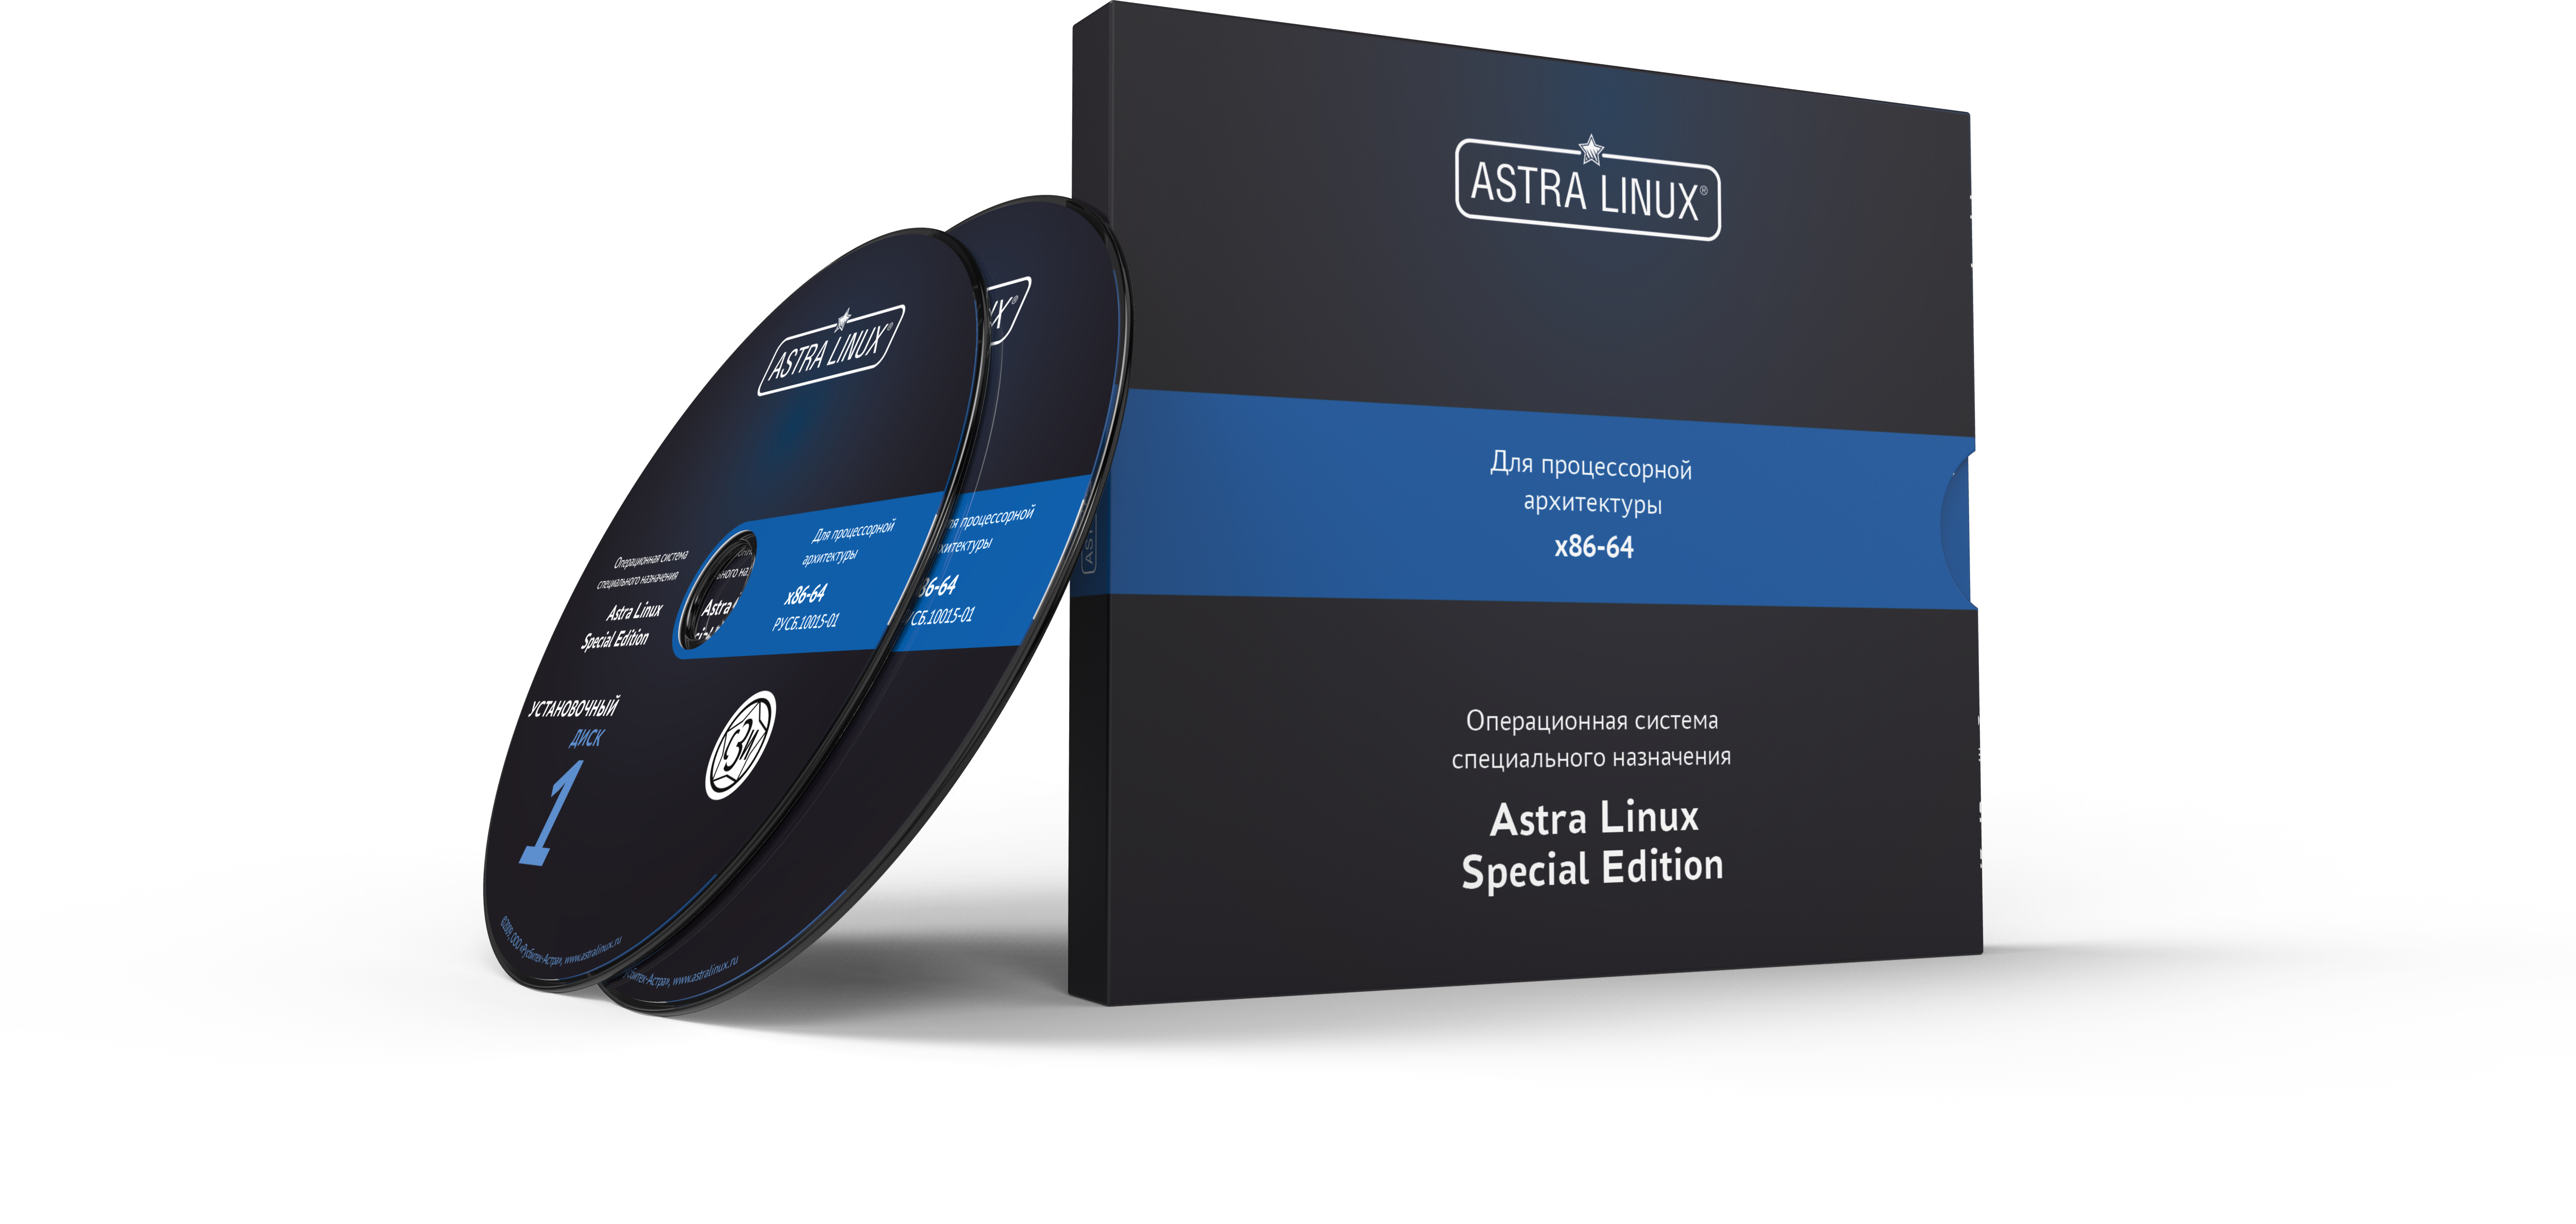 Astra Linux Special Edition 1.7 - Воронеж, "Усиленный", ФСТЭК, без огр. срока, ТП "Стандарт" на 12 мес.